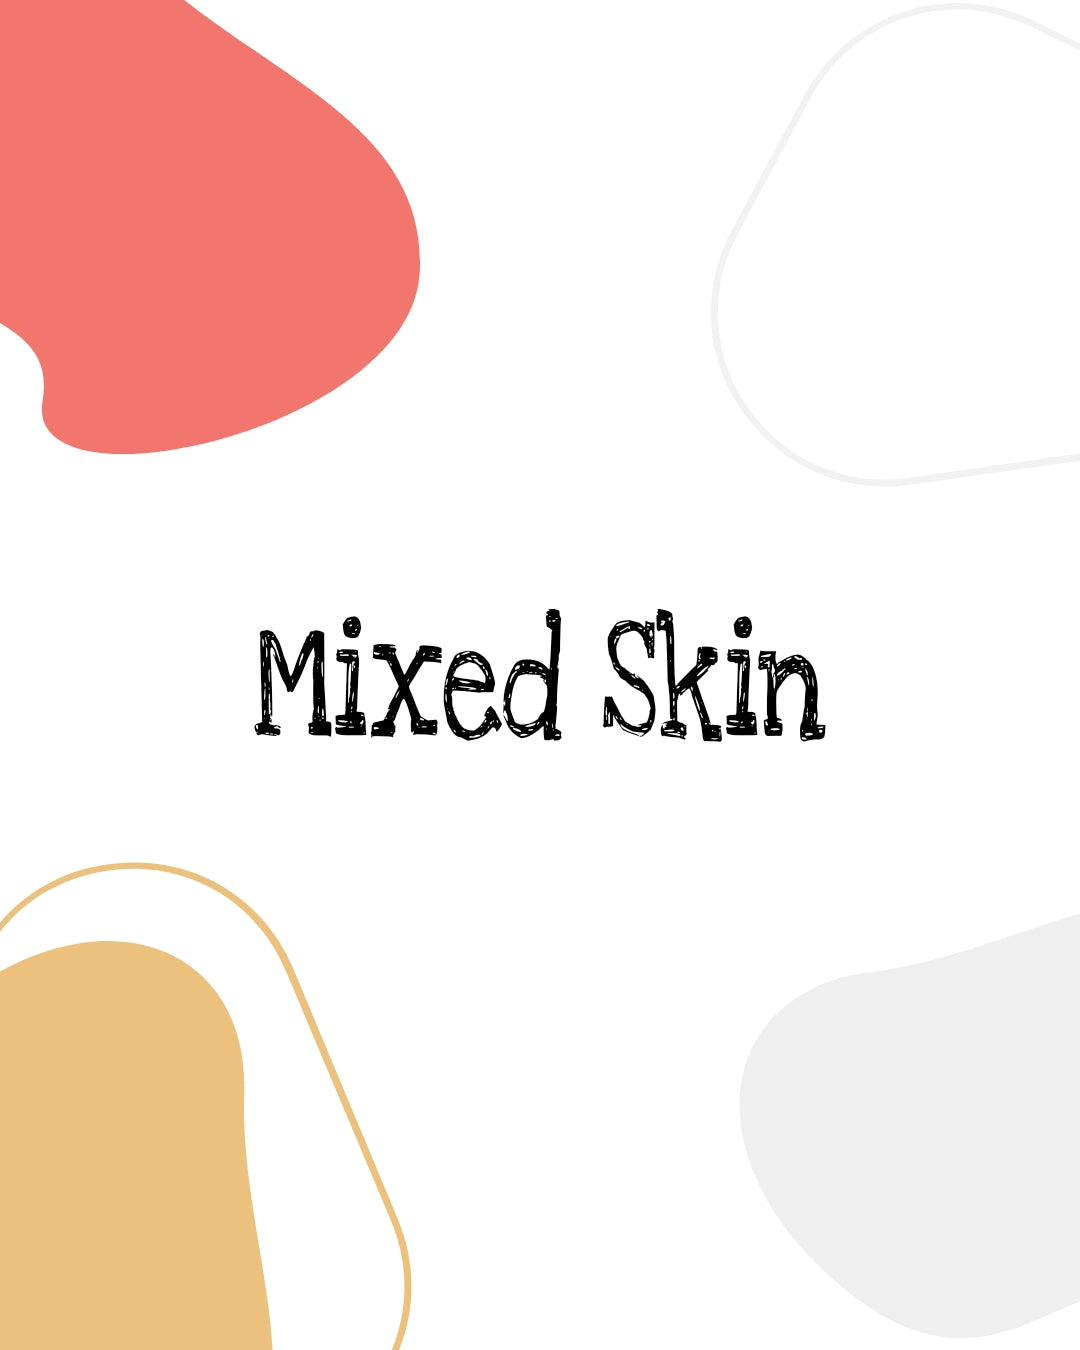 Mixed Skin